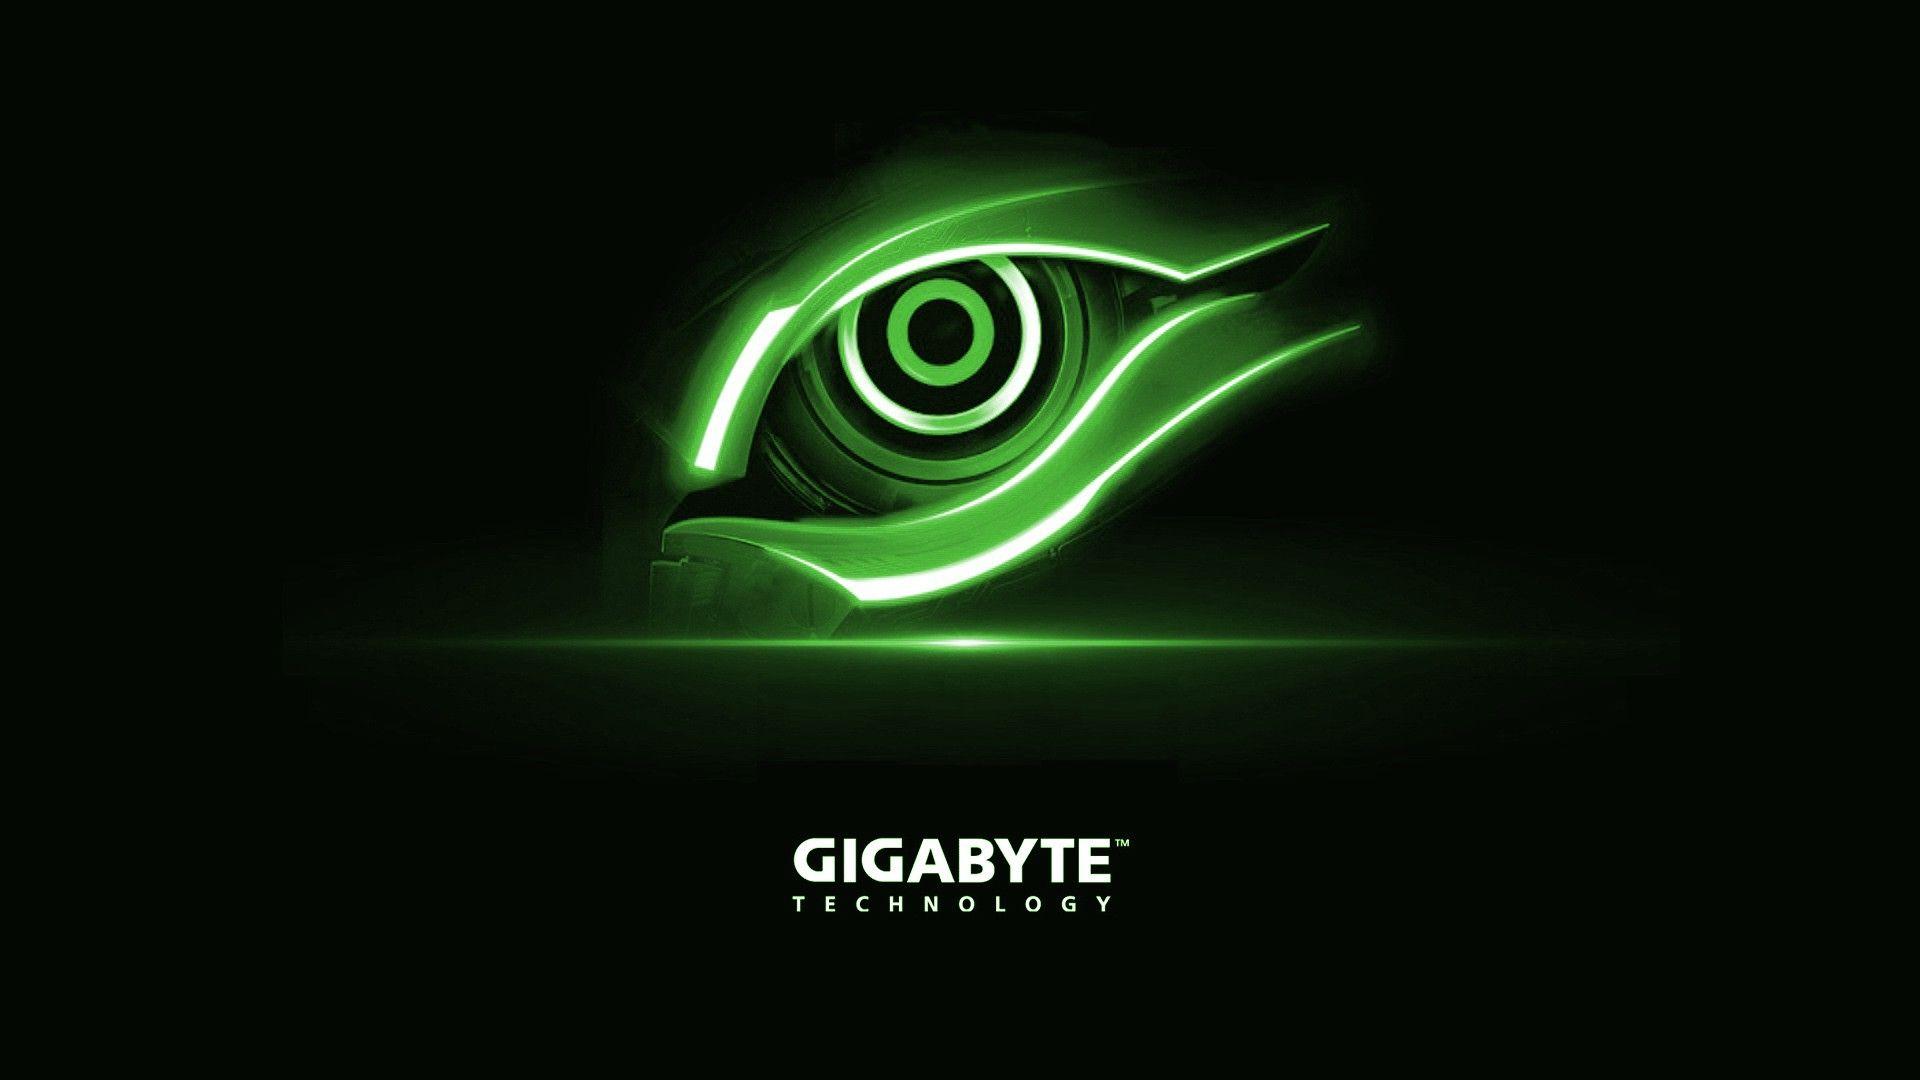 Green Eye Tech Logo - Gigabyte Technology Green Eye Logo Wallpaper free desktop